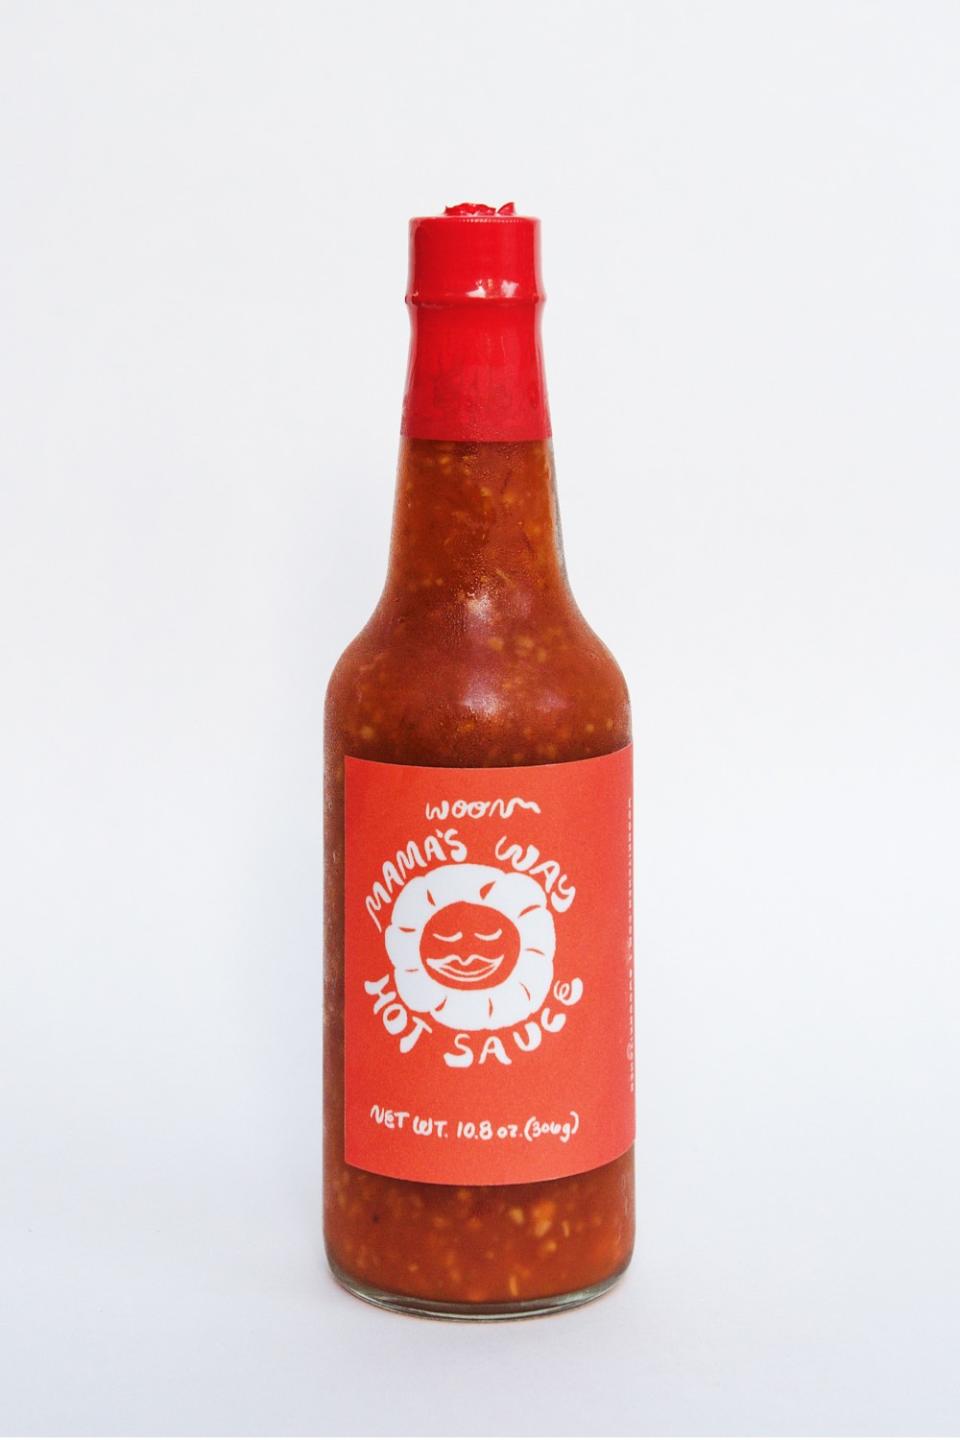 Woon's Mama's Way hot sauce.